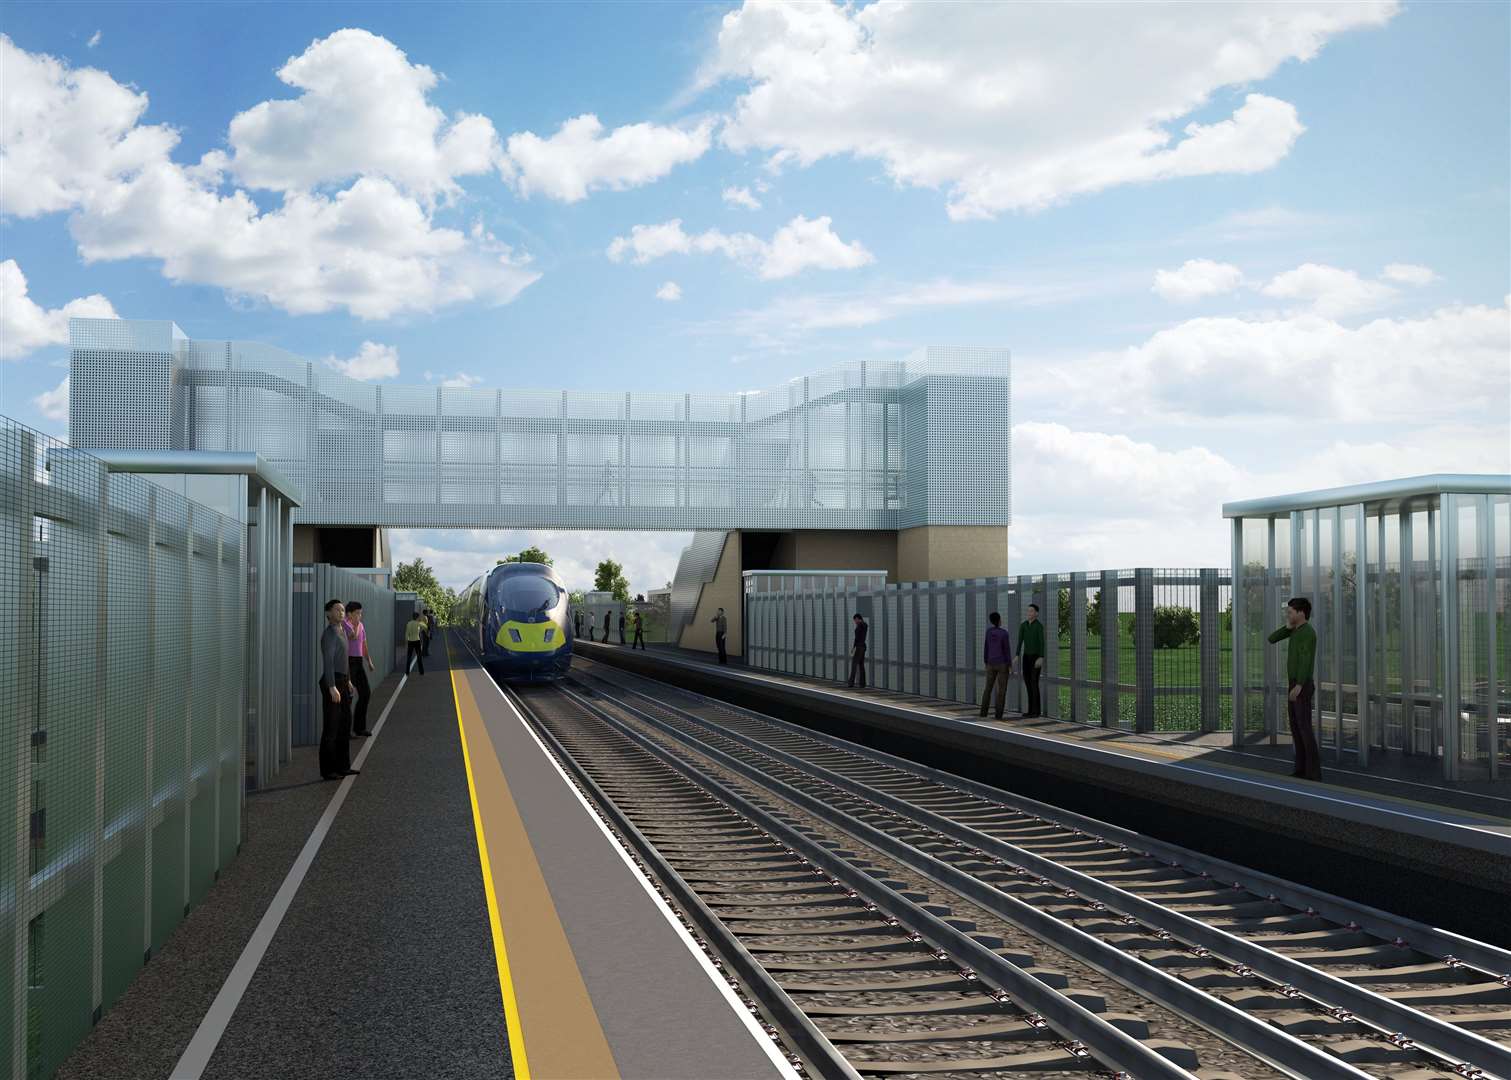 The Heathlands garden village will need its own railway station, the inspector said